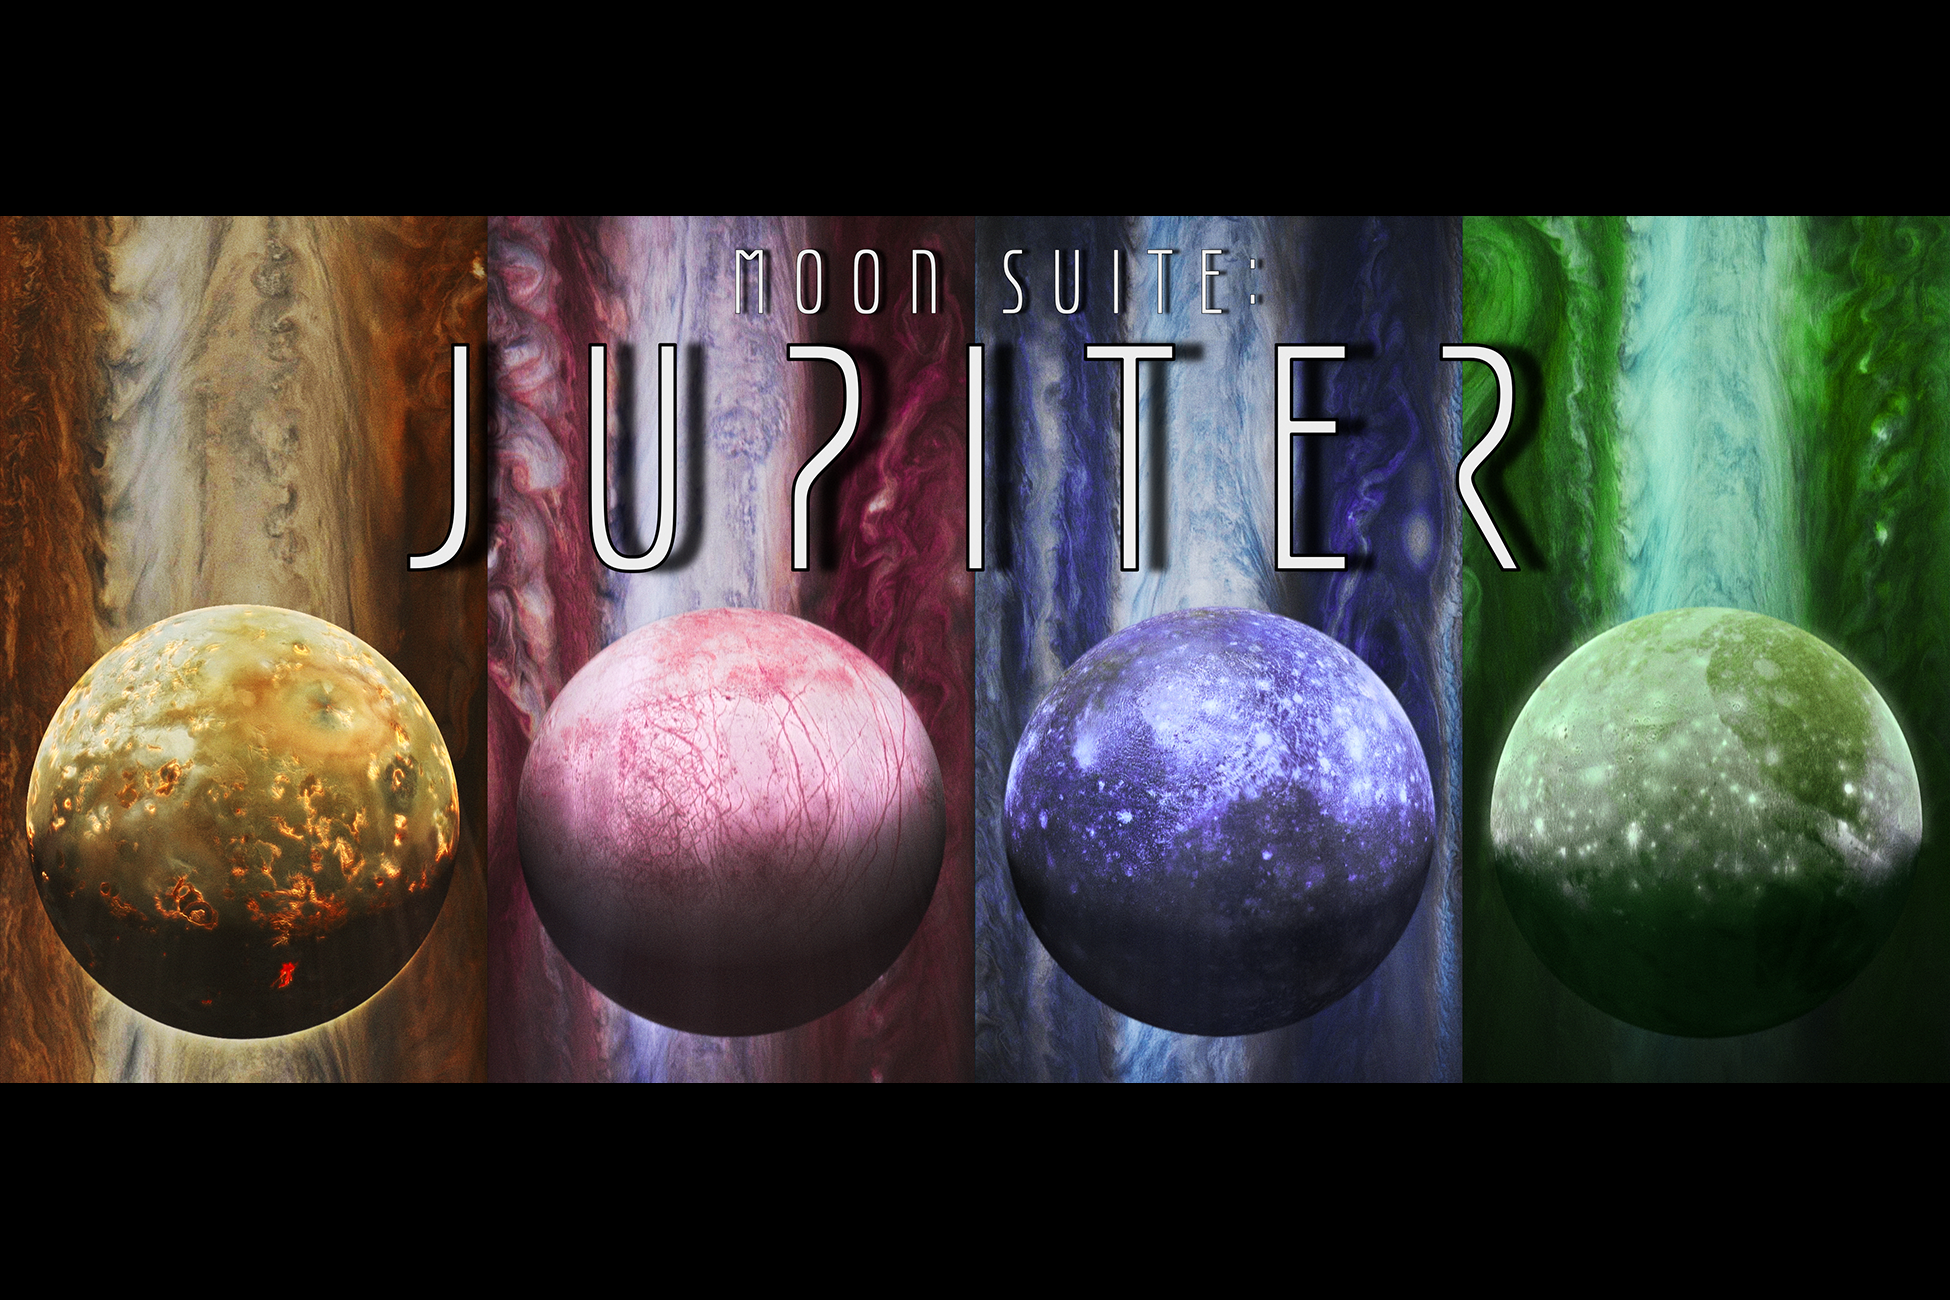 Moon Suite: JUPITER